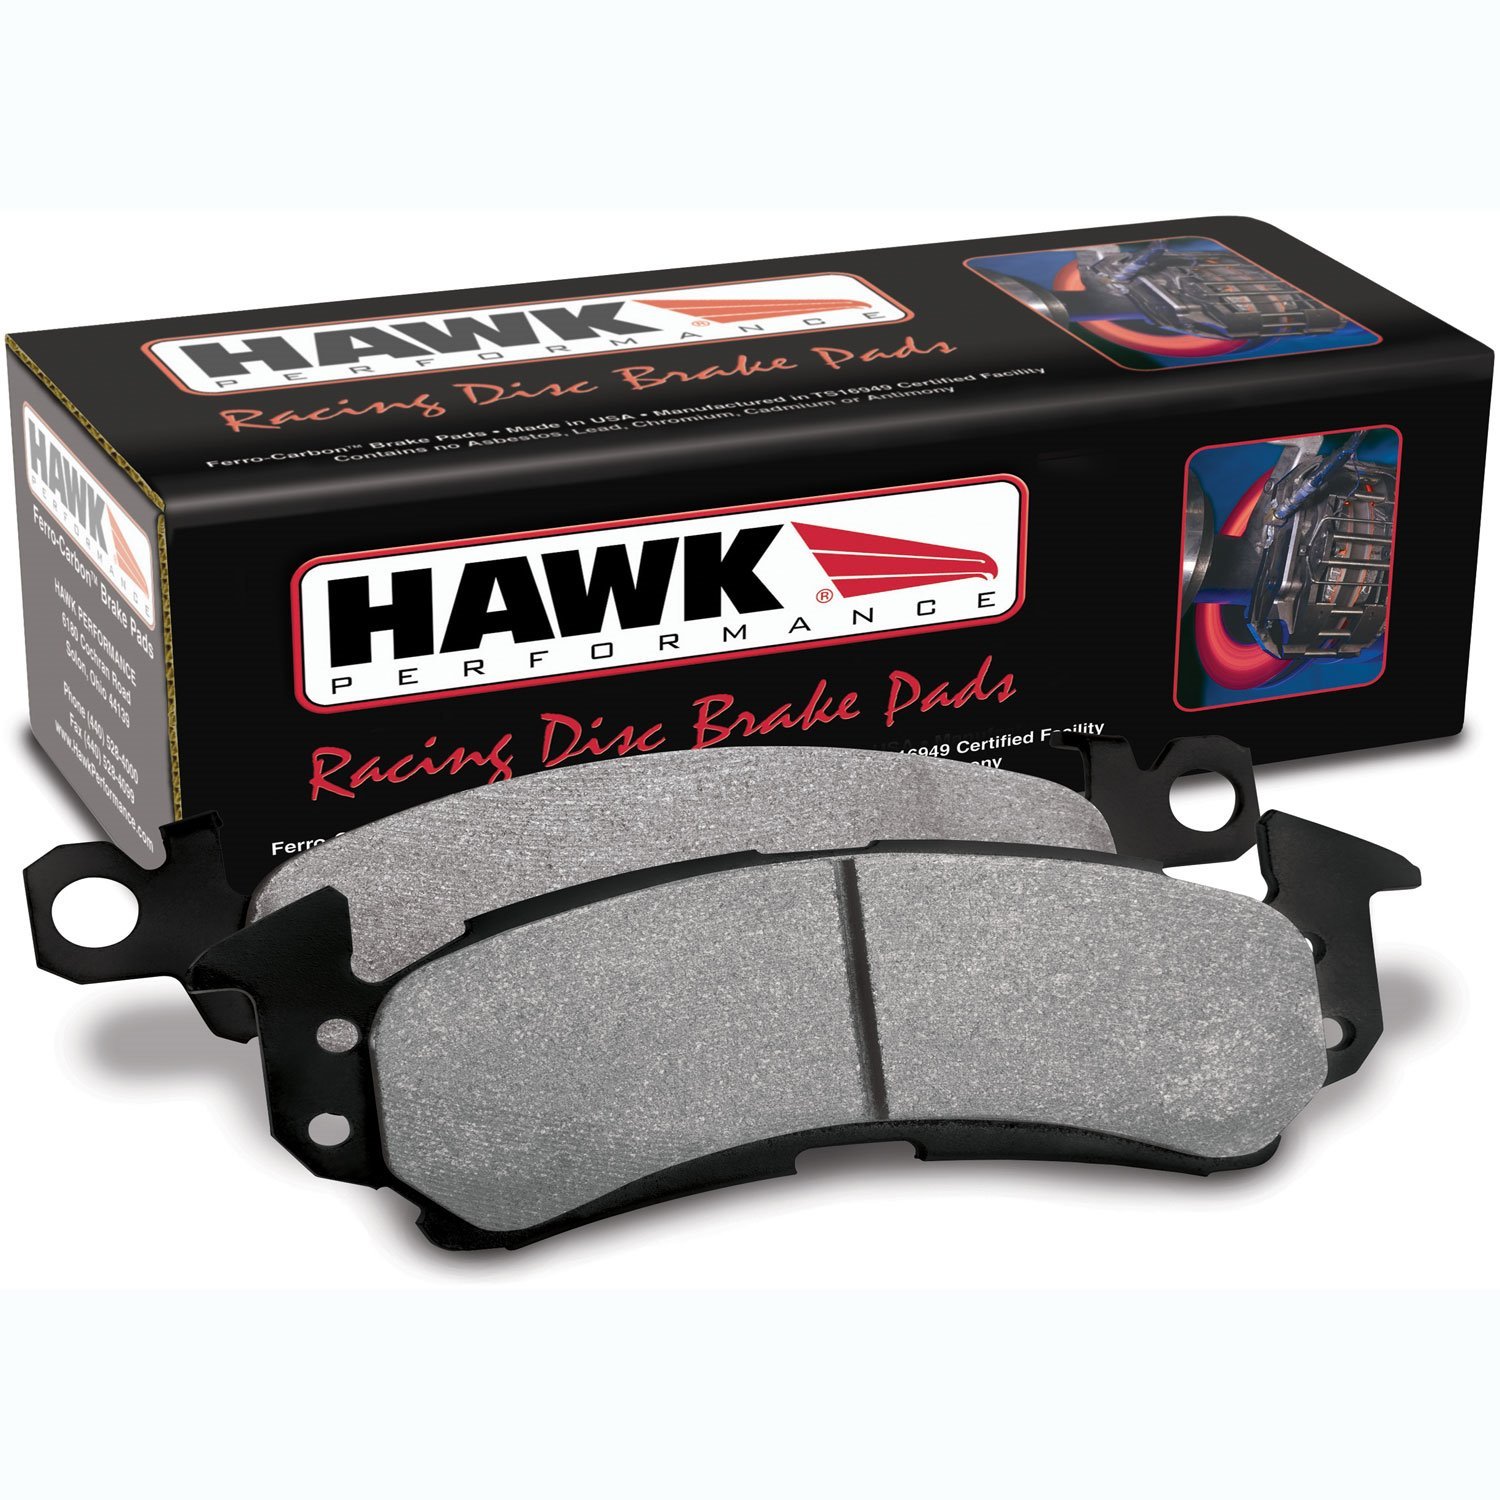 Disc Brake Pad HP Plus w/0.628 Thickness